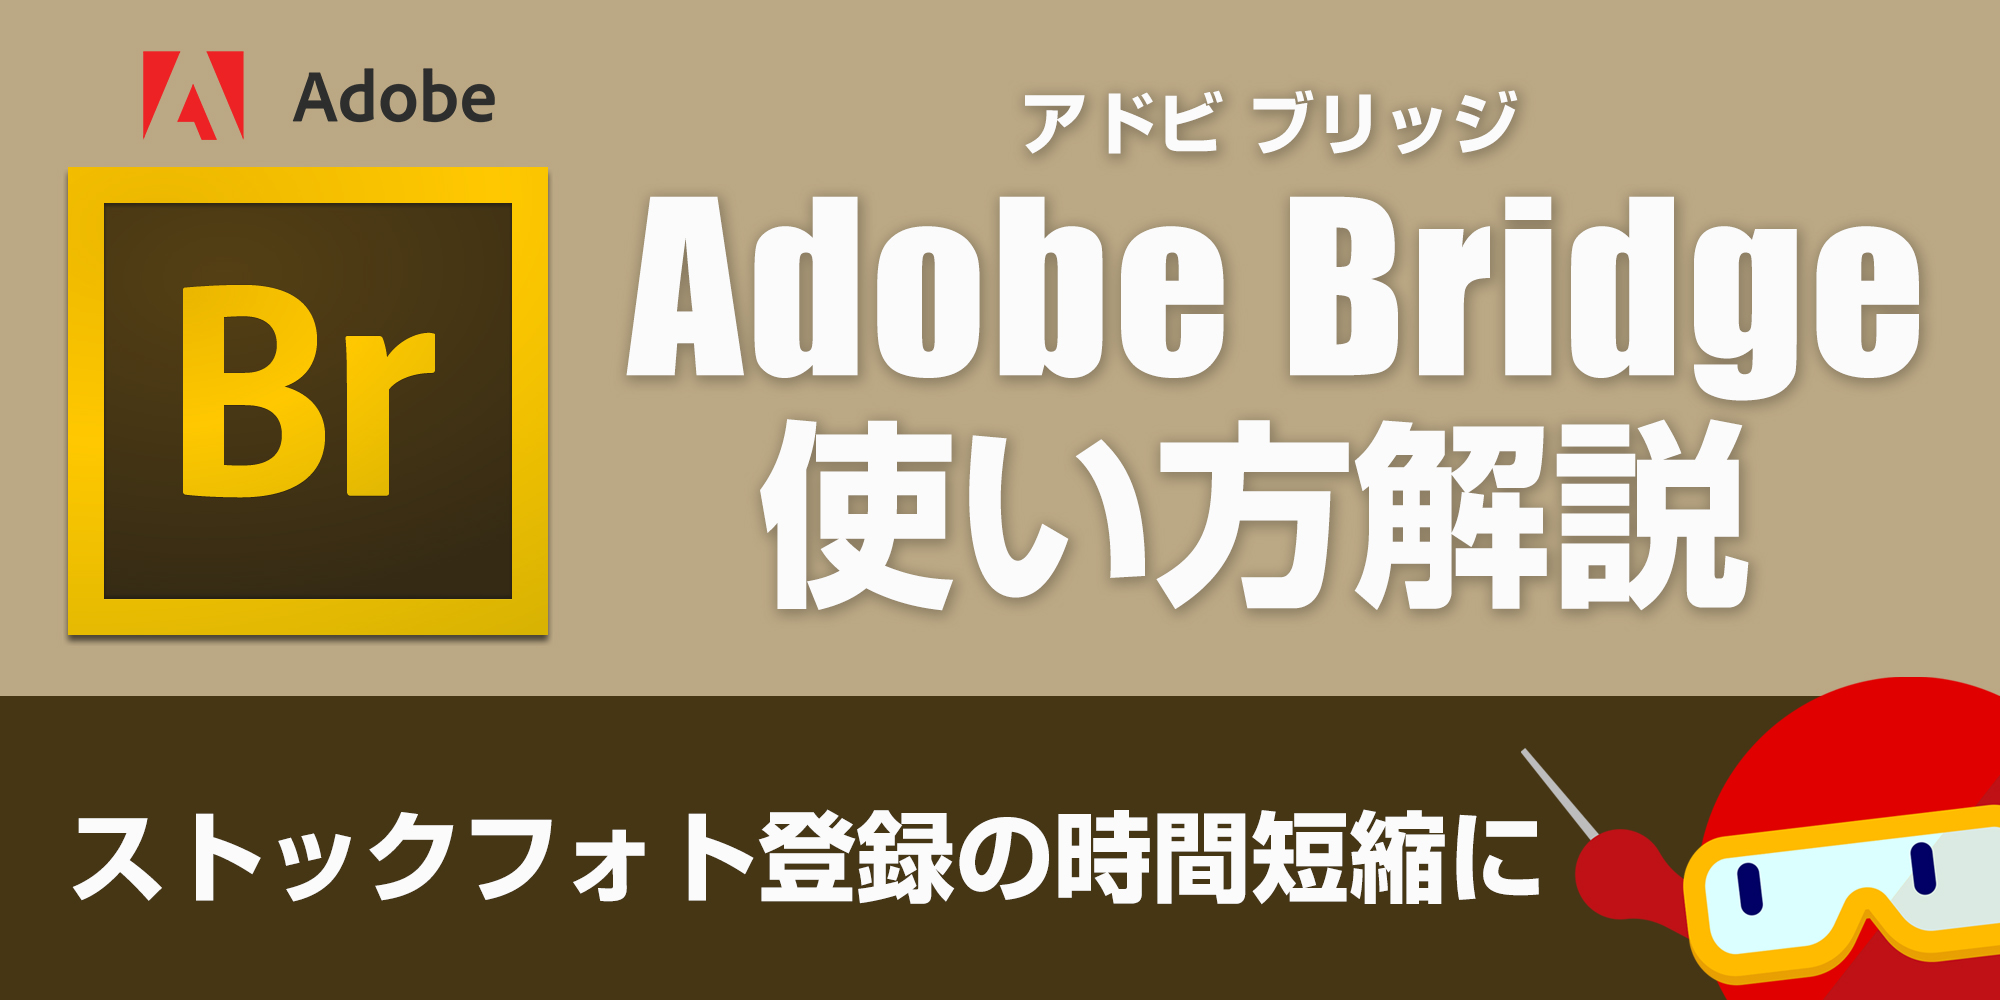 Adobe Bridgeの使い方解説